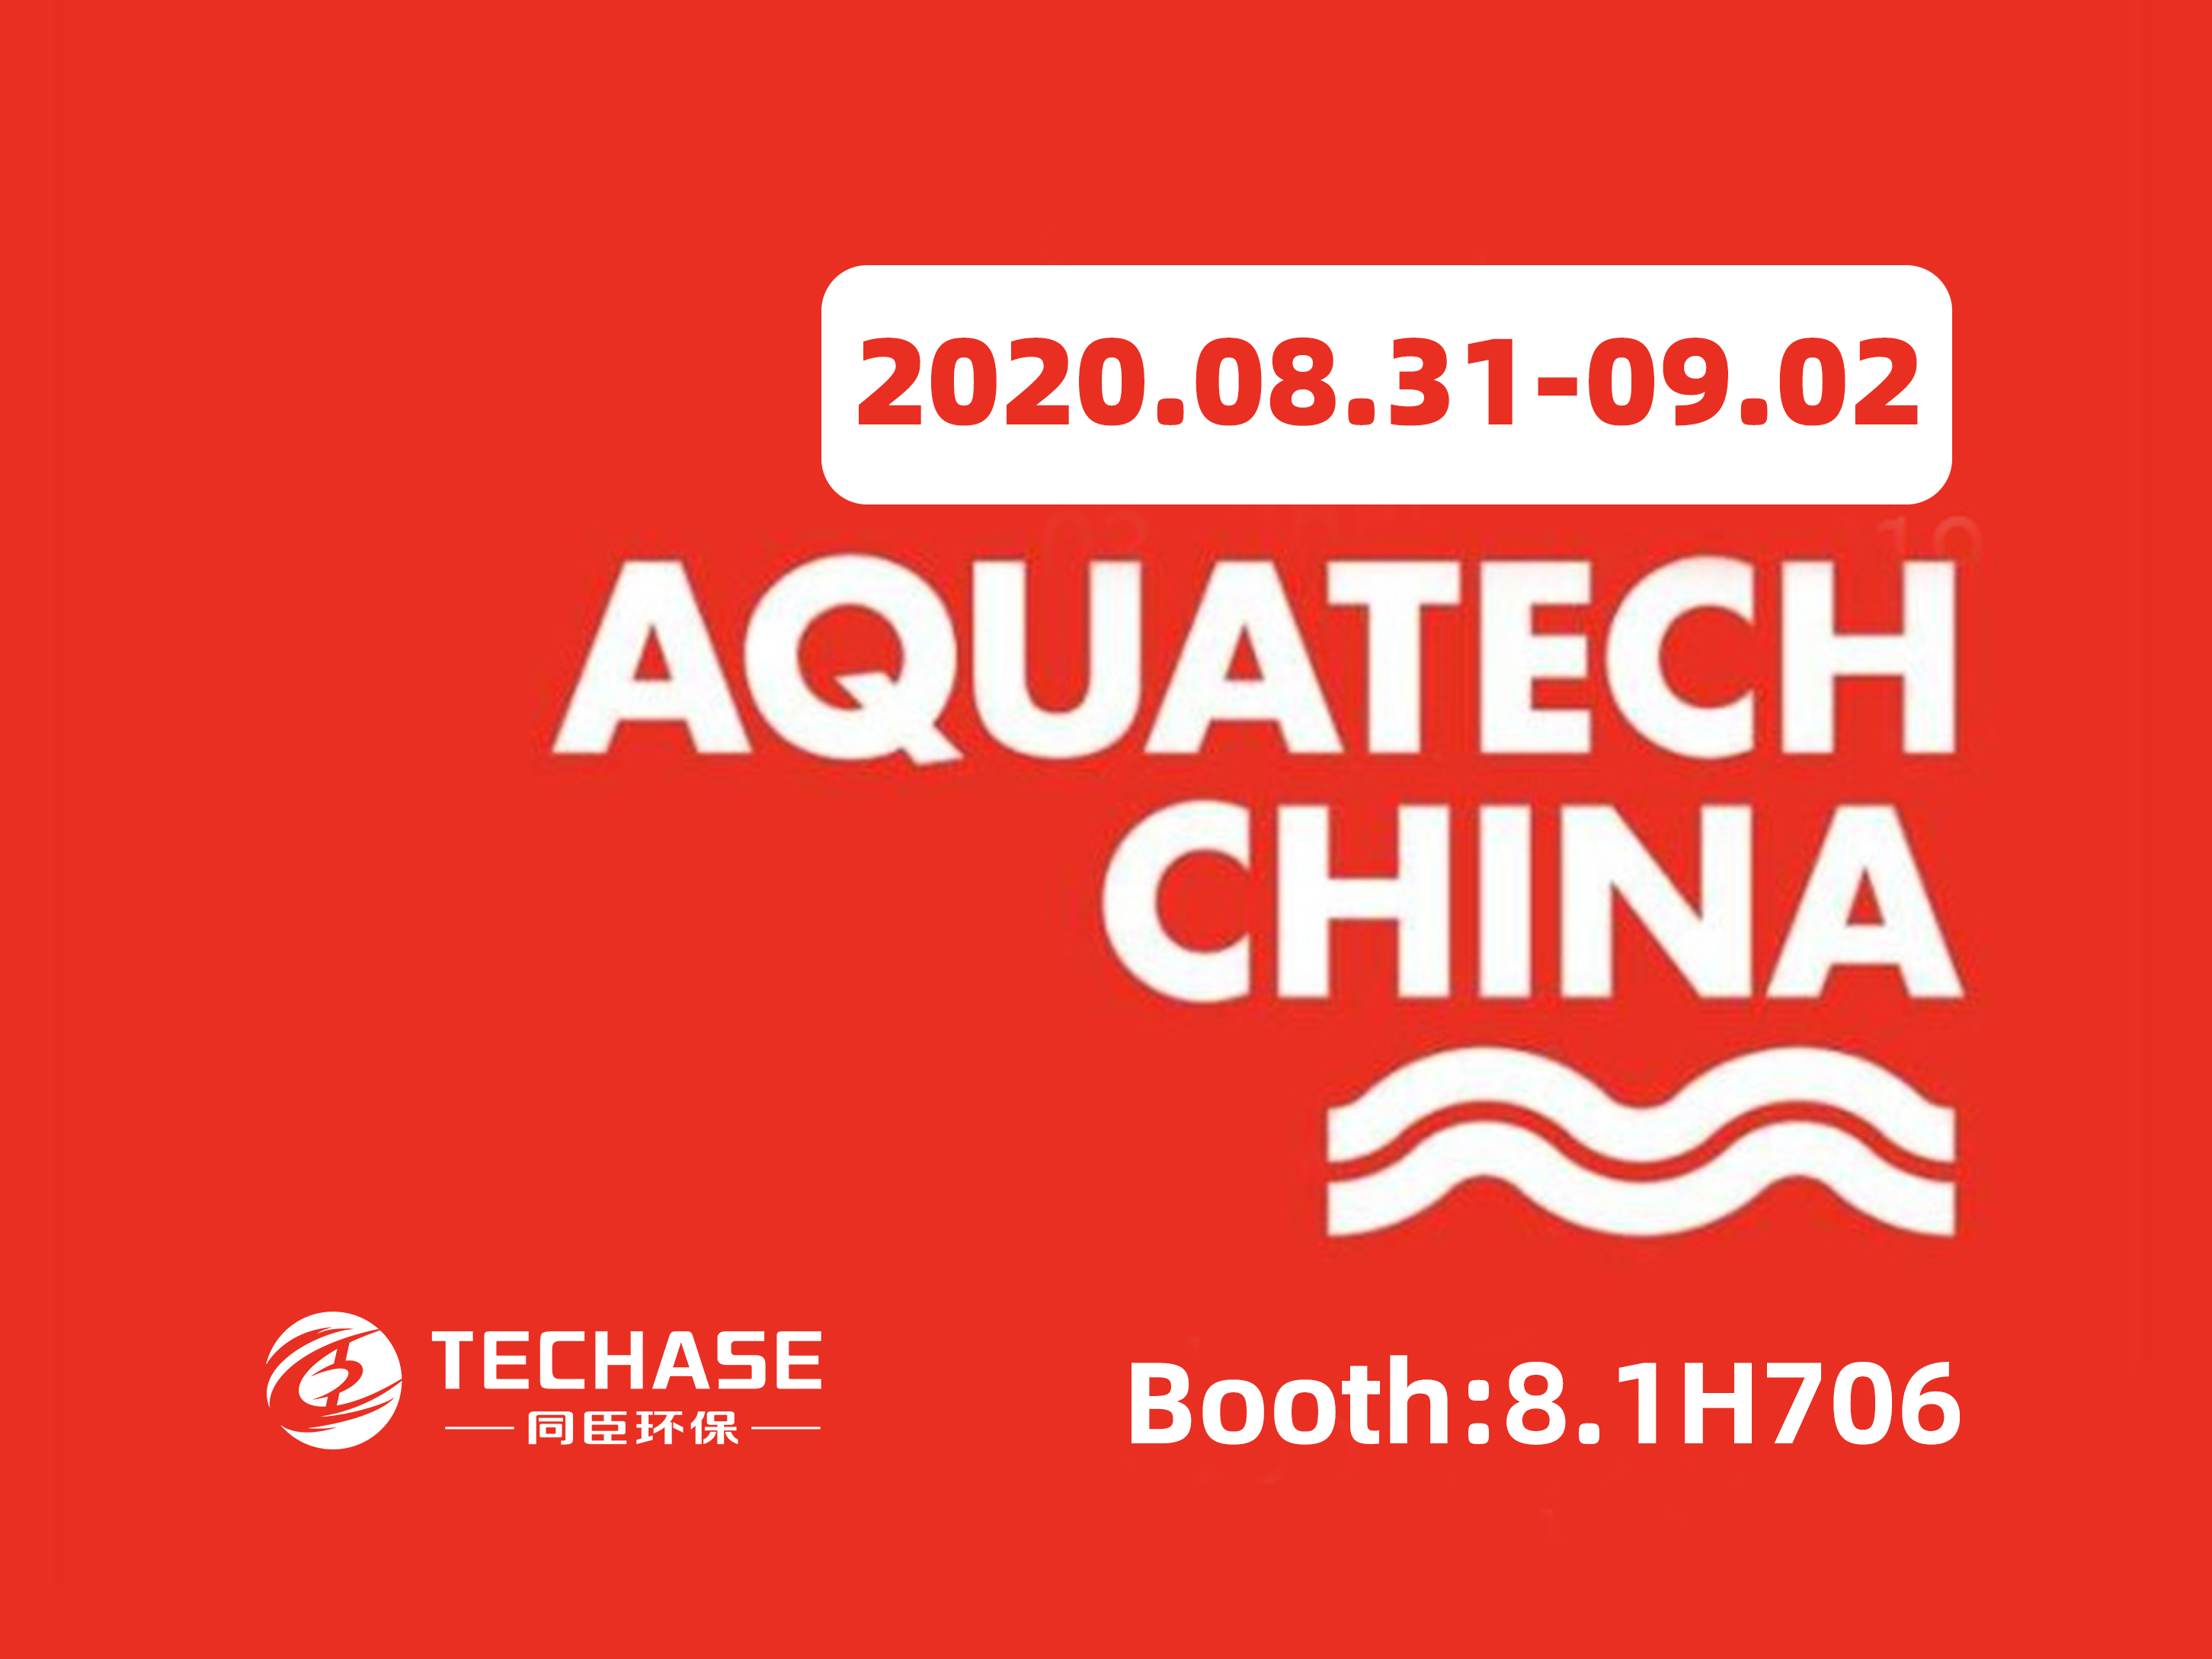 Techase Exhibition Forecast | Aquatech China 2020